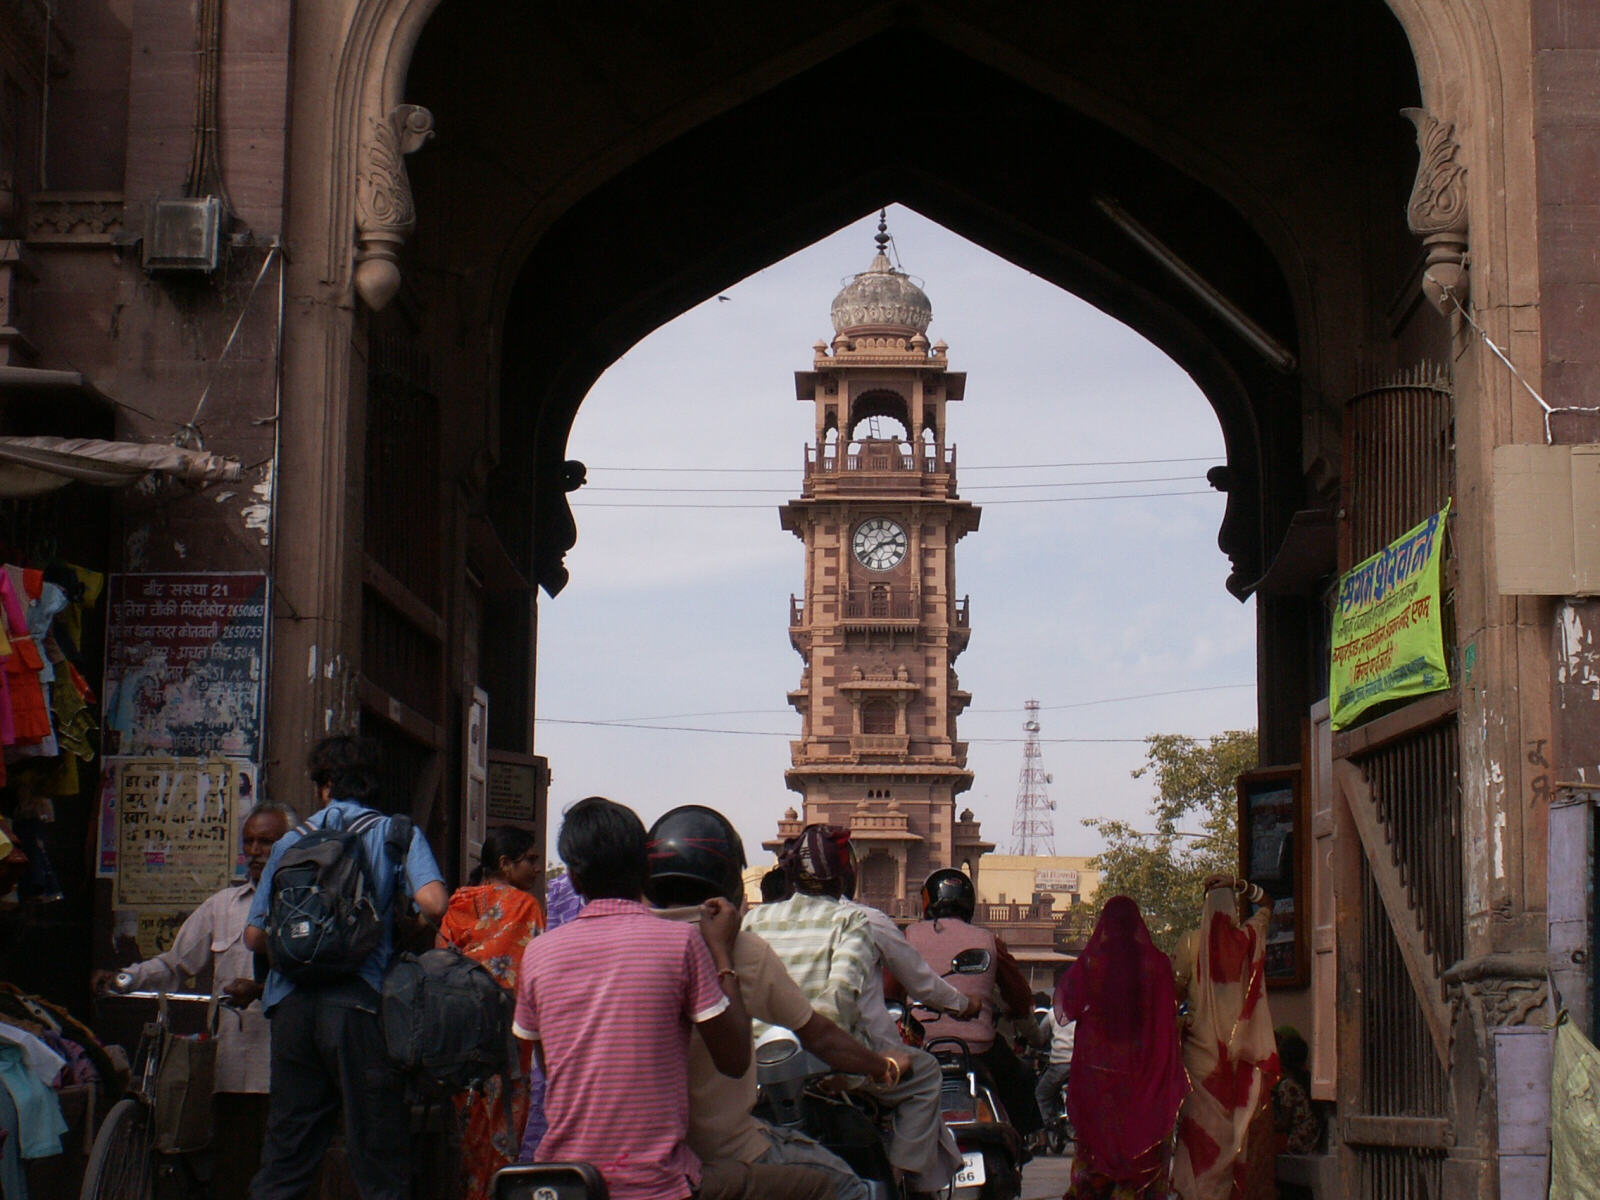 The clock tower in Sardar market, Jodhpur, Rajasthan